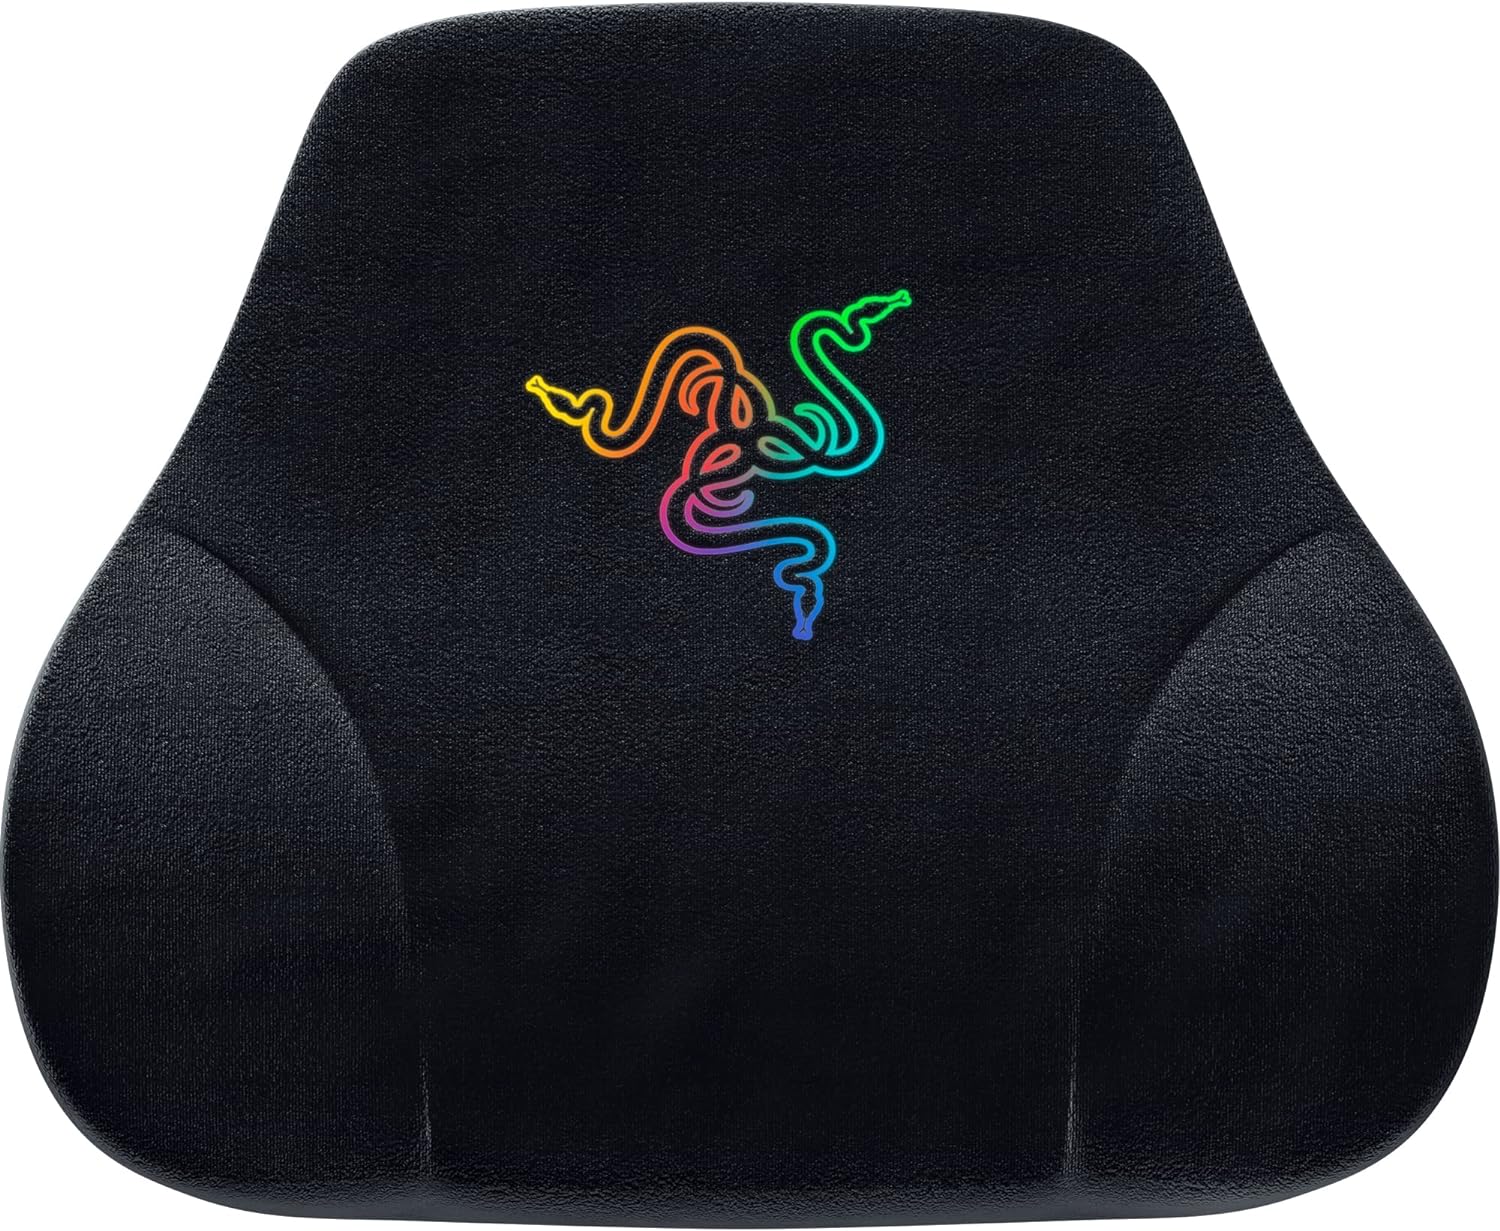 Razer Head Cushion Chroma Neck & Head Support for Gaming Chairs: Ergonomically Designed - Memory Foam Padding - Wrapped in Plush Black Velvet - Chroma RGB